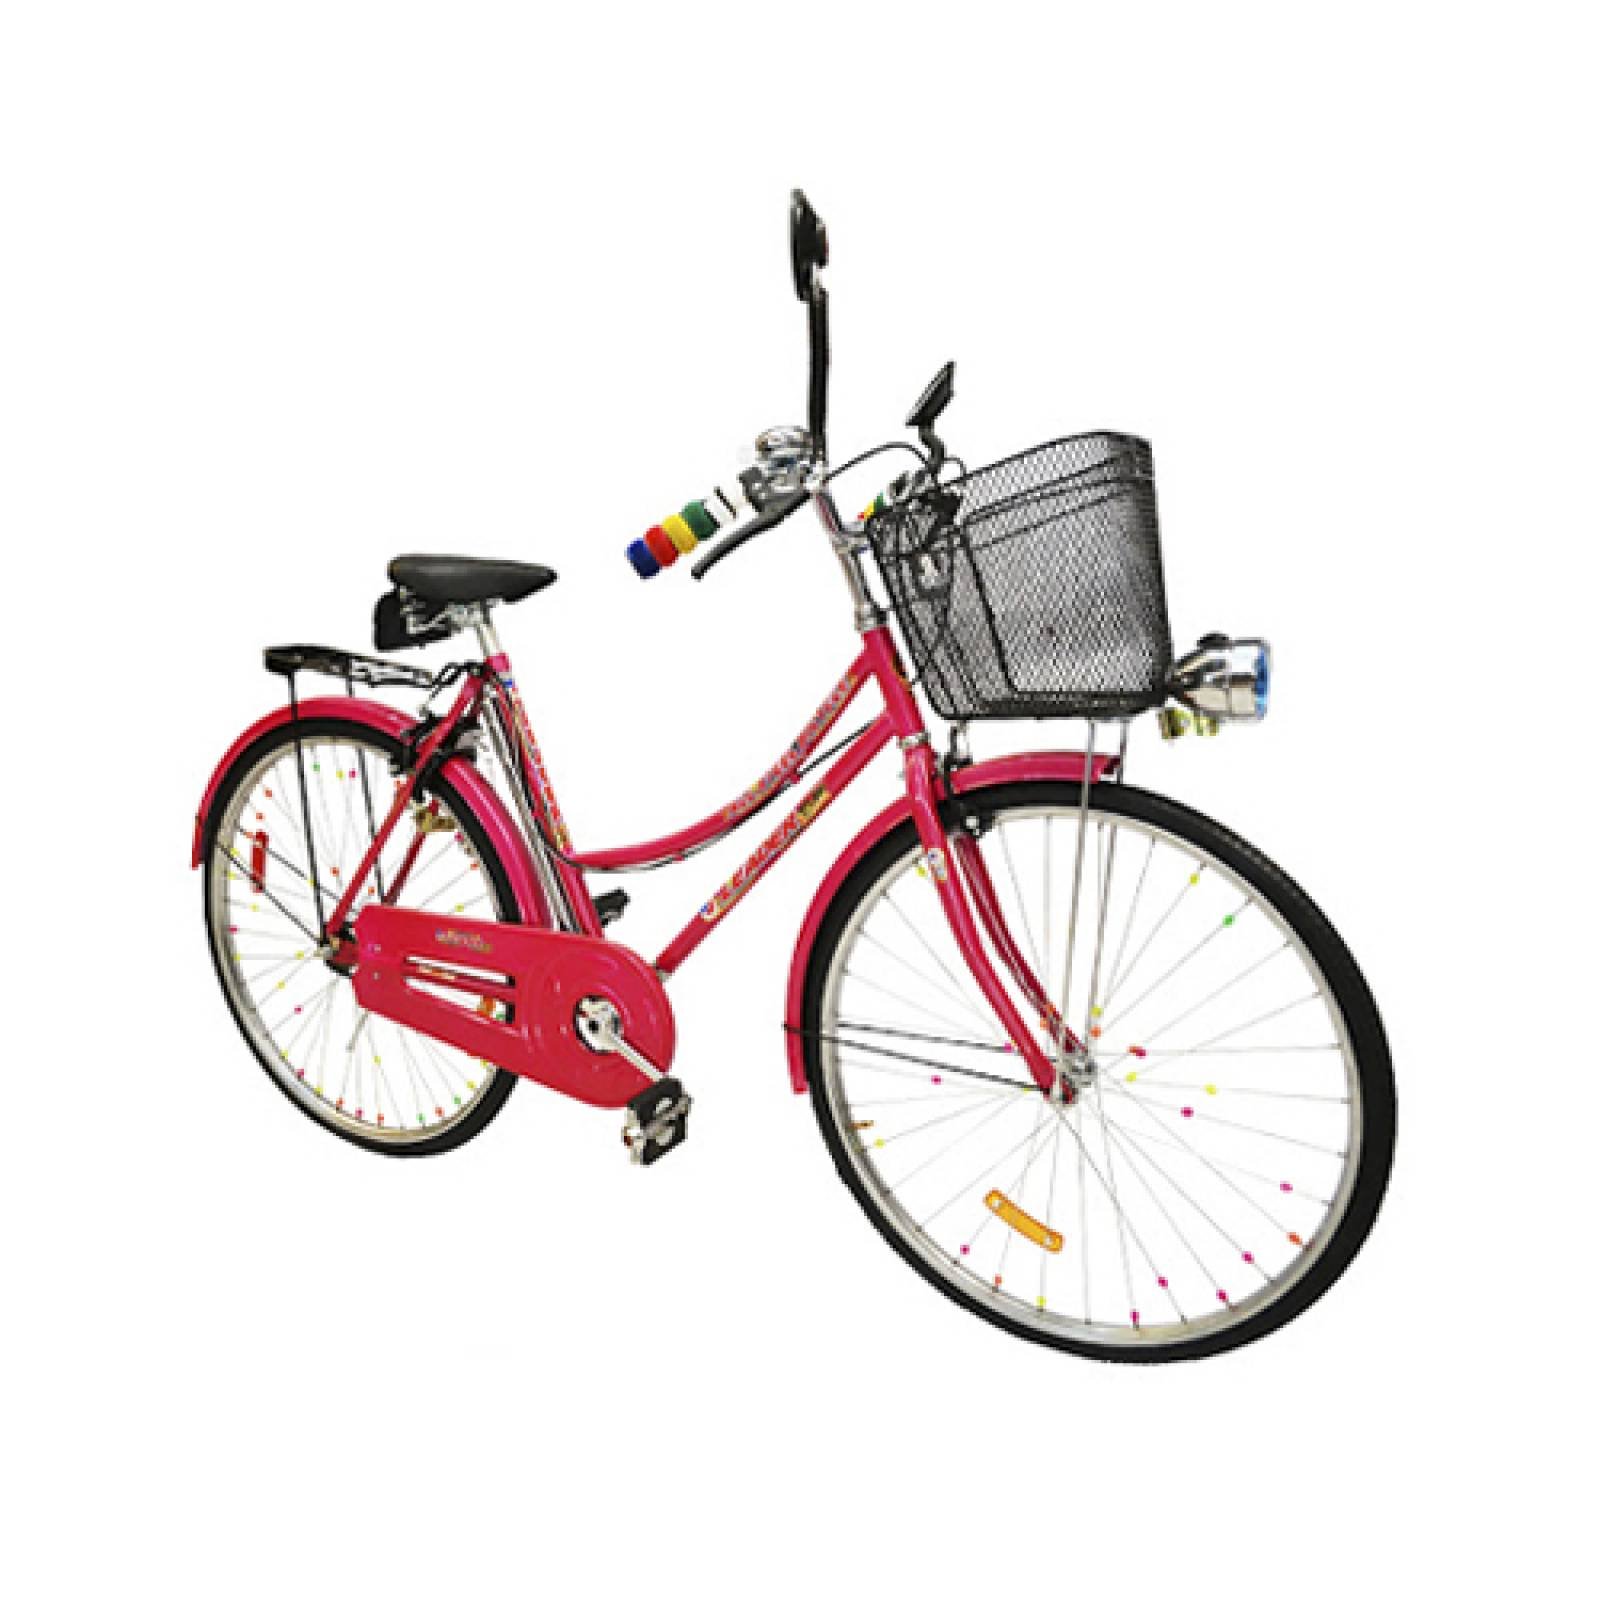 Bicicleta R26x1 3 8 turismo Equipada caja rosa